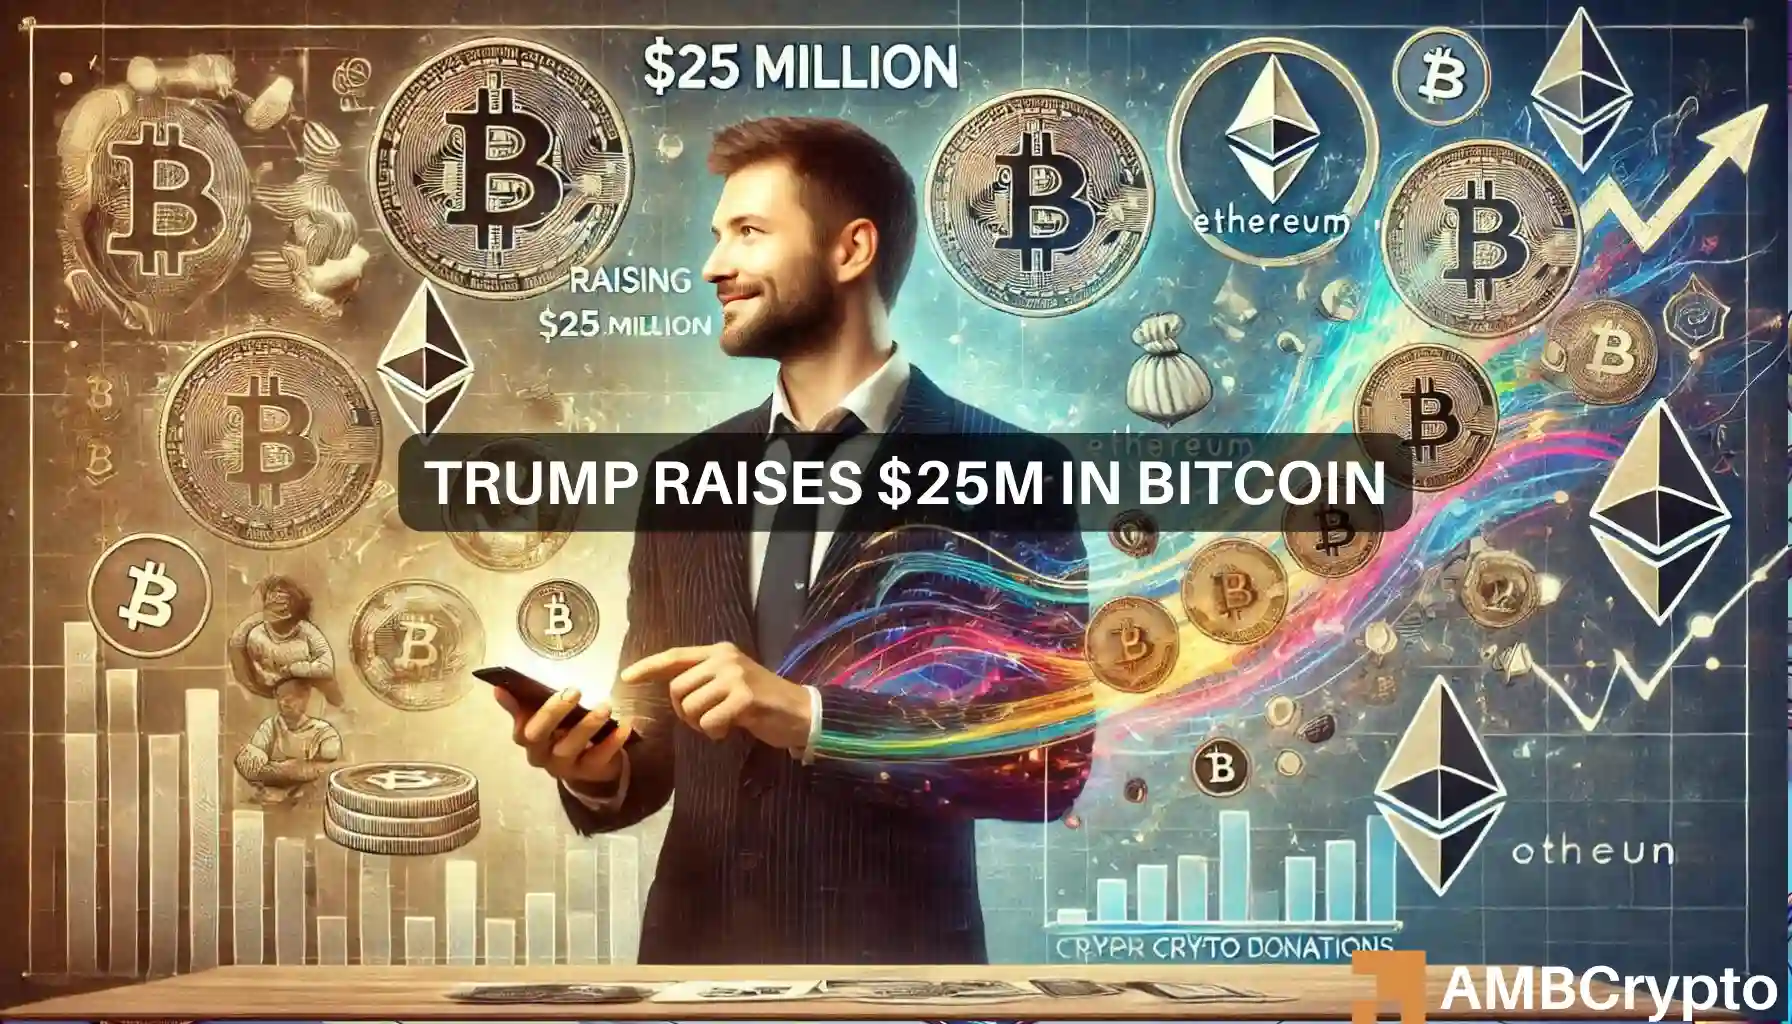 Trump raises $25M in Bitcoin